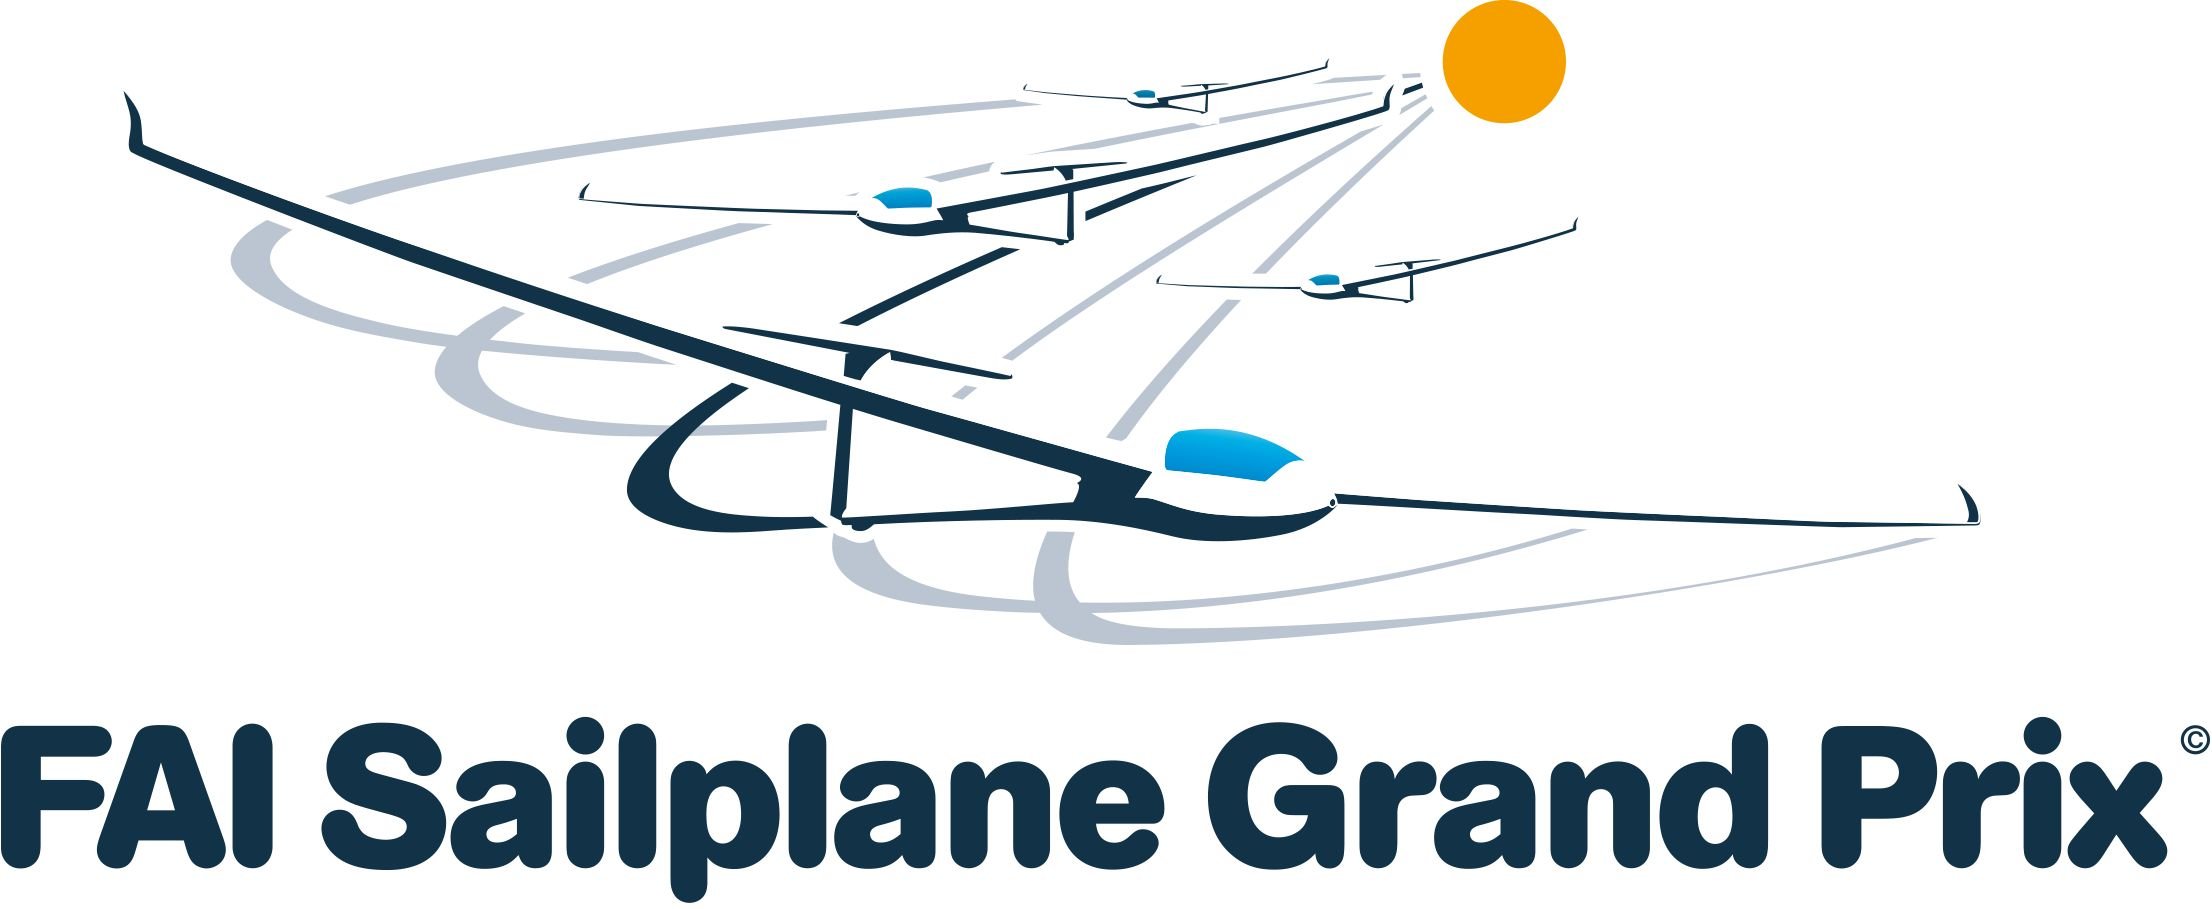 [Series 12 FAI Sailplane Grand Prix] Netherlands Venue